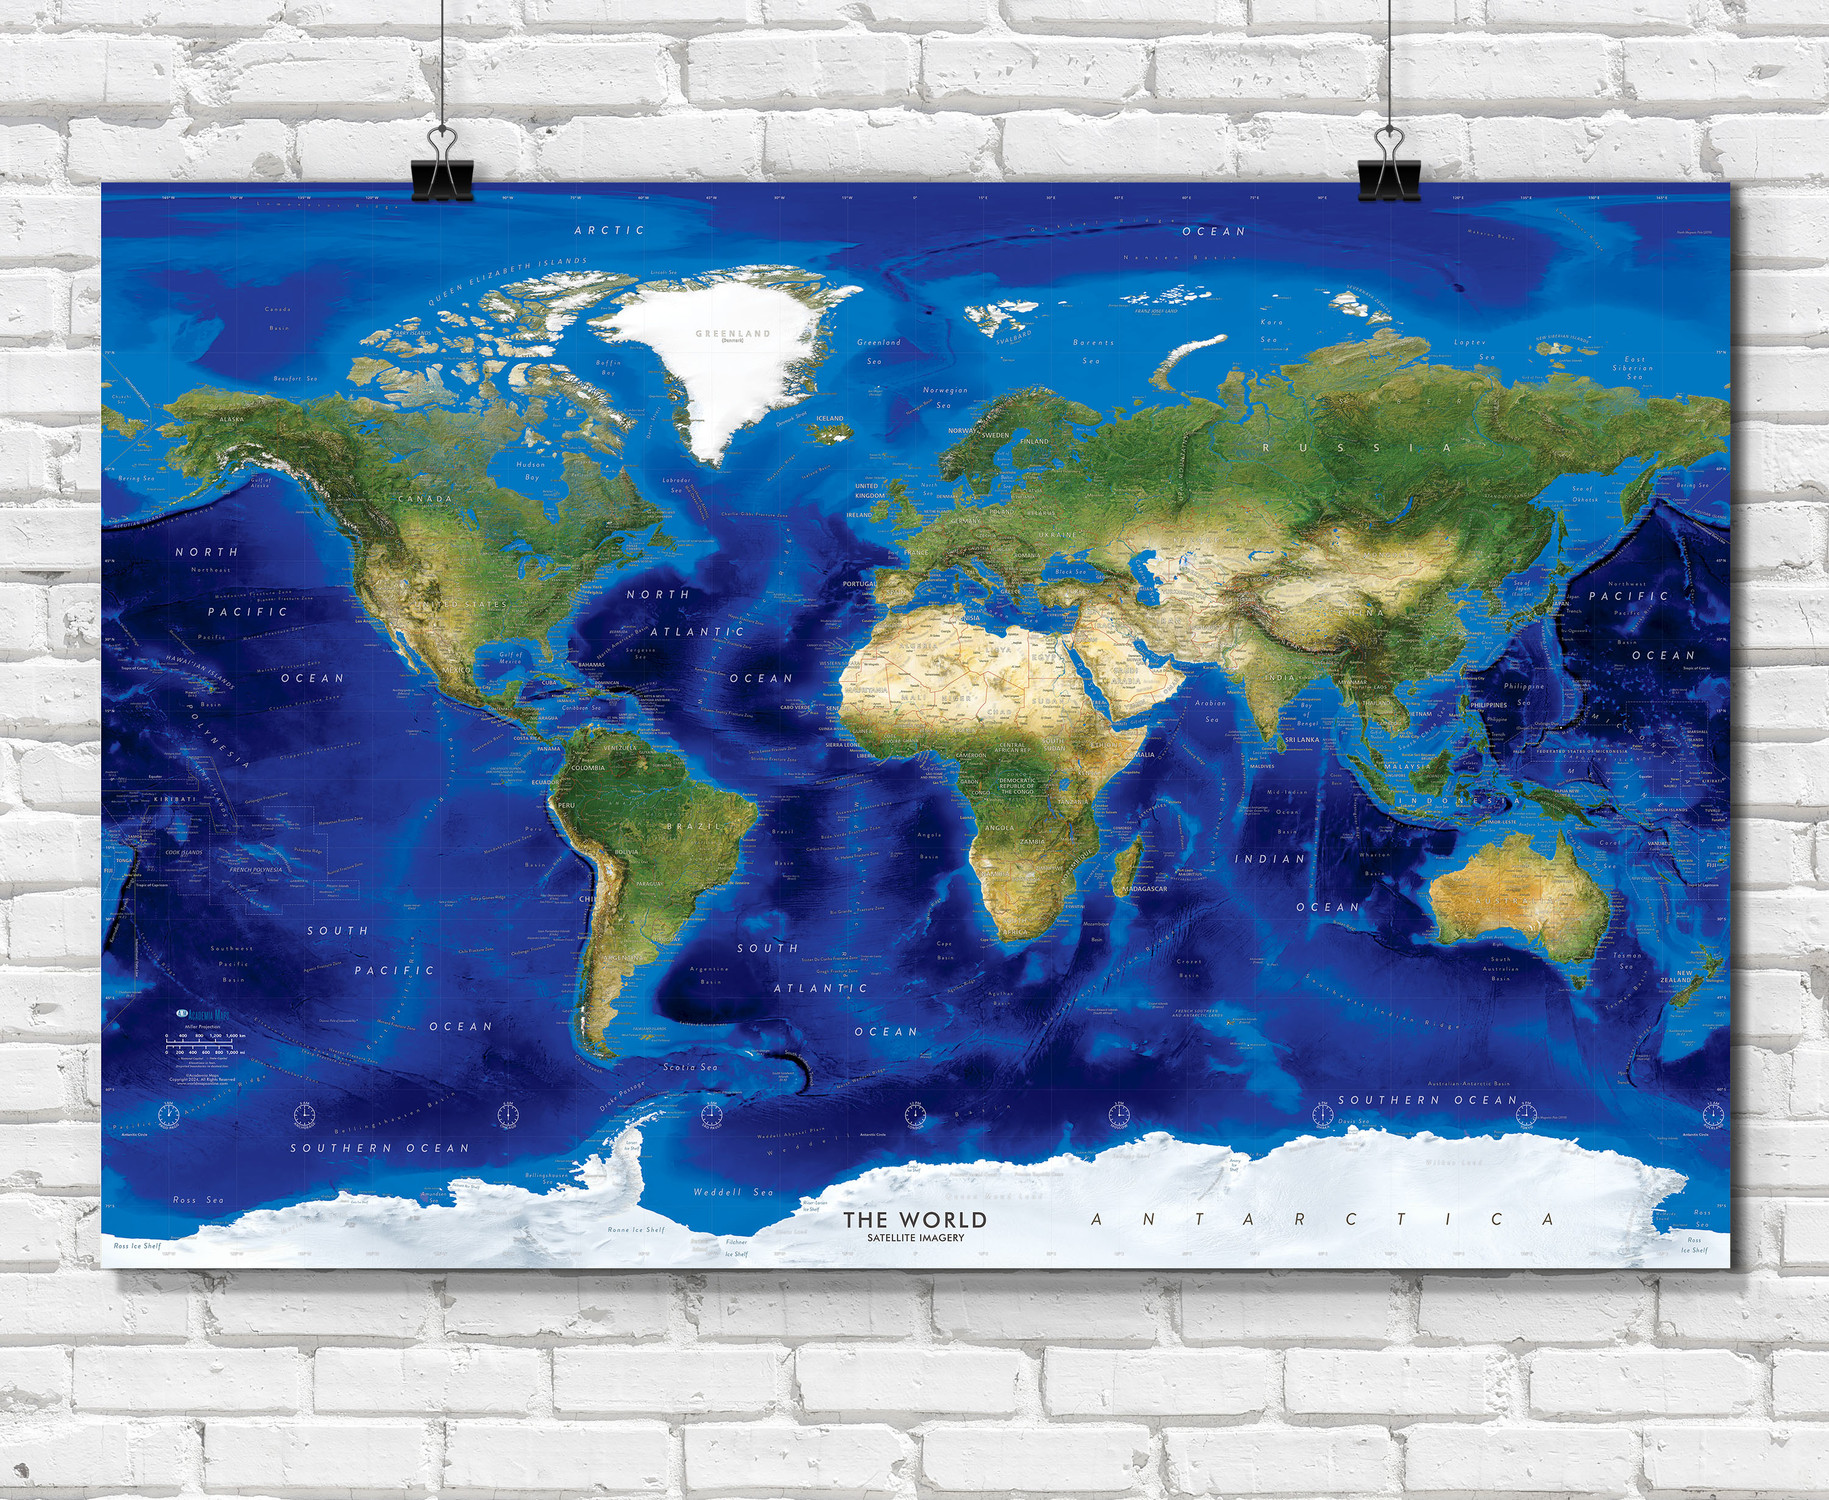 World Topography & Bathymetry Satellite Image Wall Map